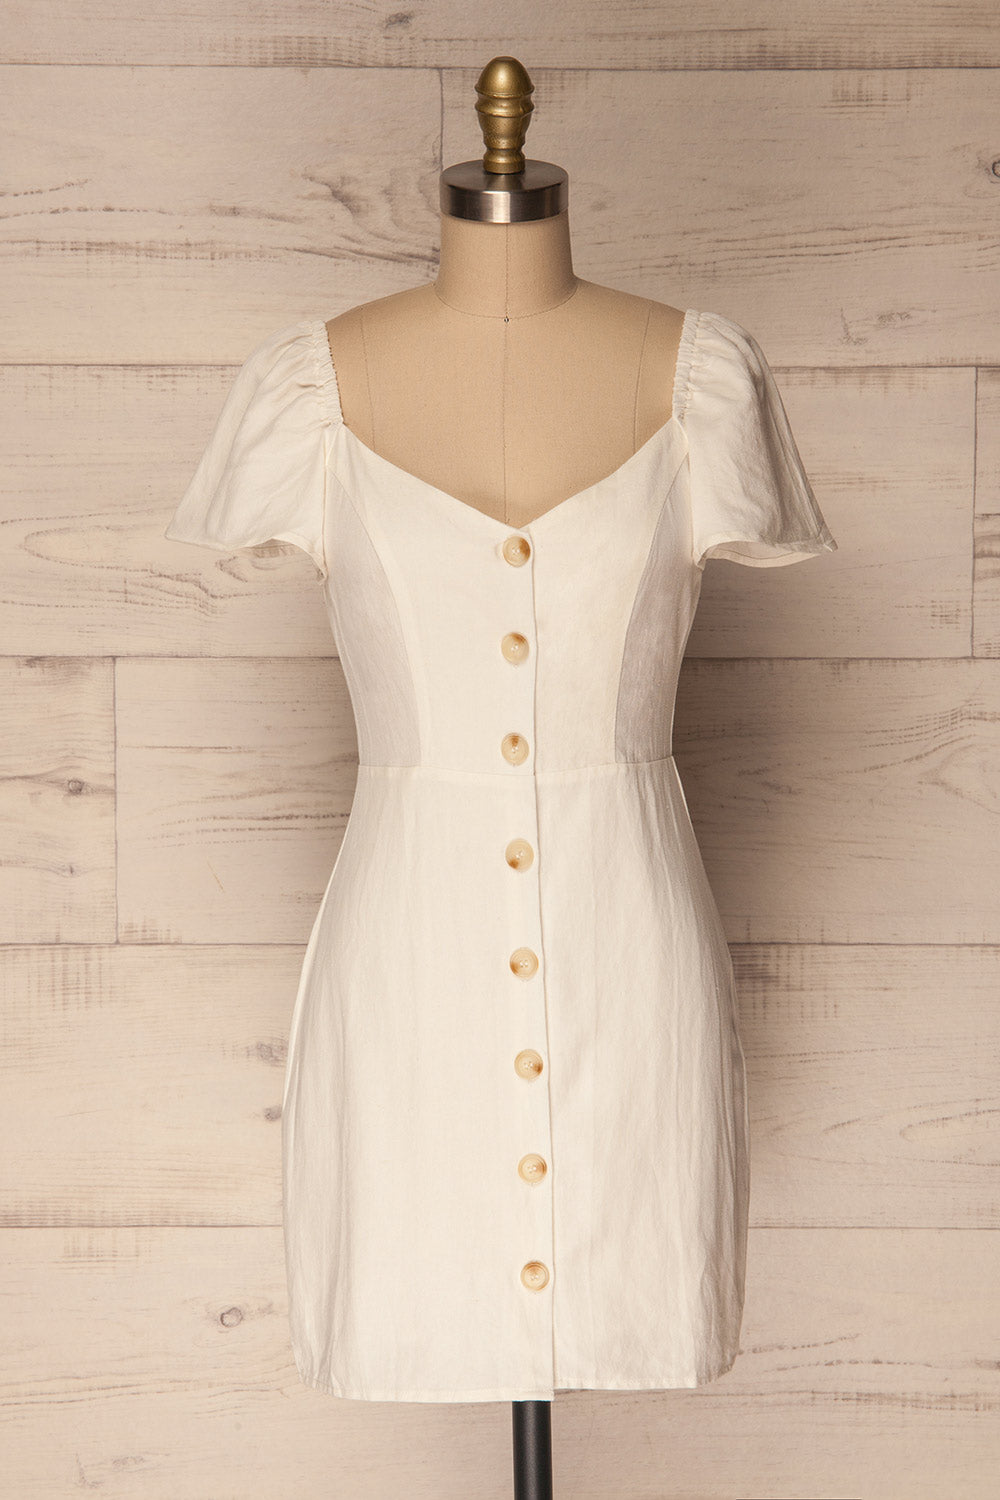 Ktea Cloud White Button-Up Fitted Summer Dress | La Petite Garçonne